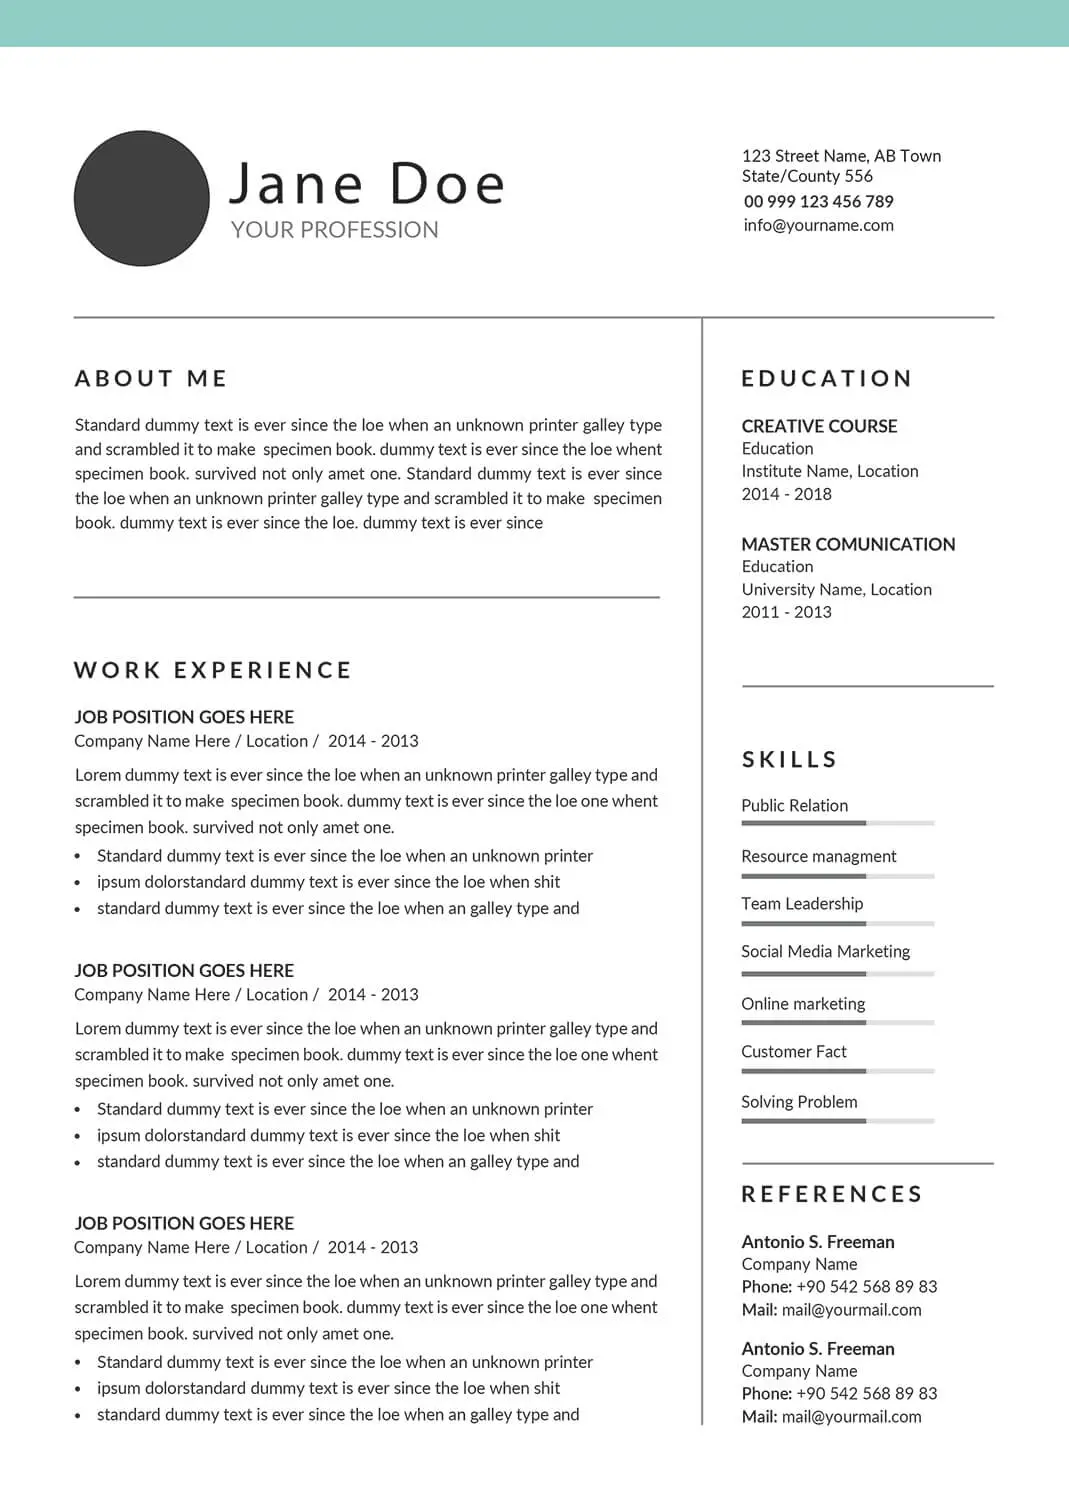 Best resume format for content
acquisitions directors